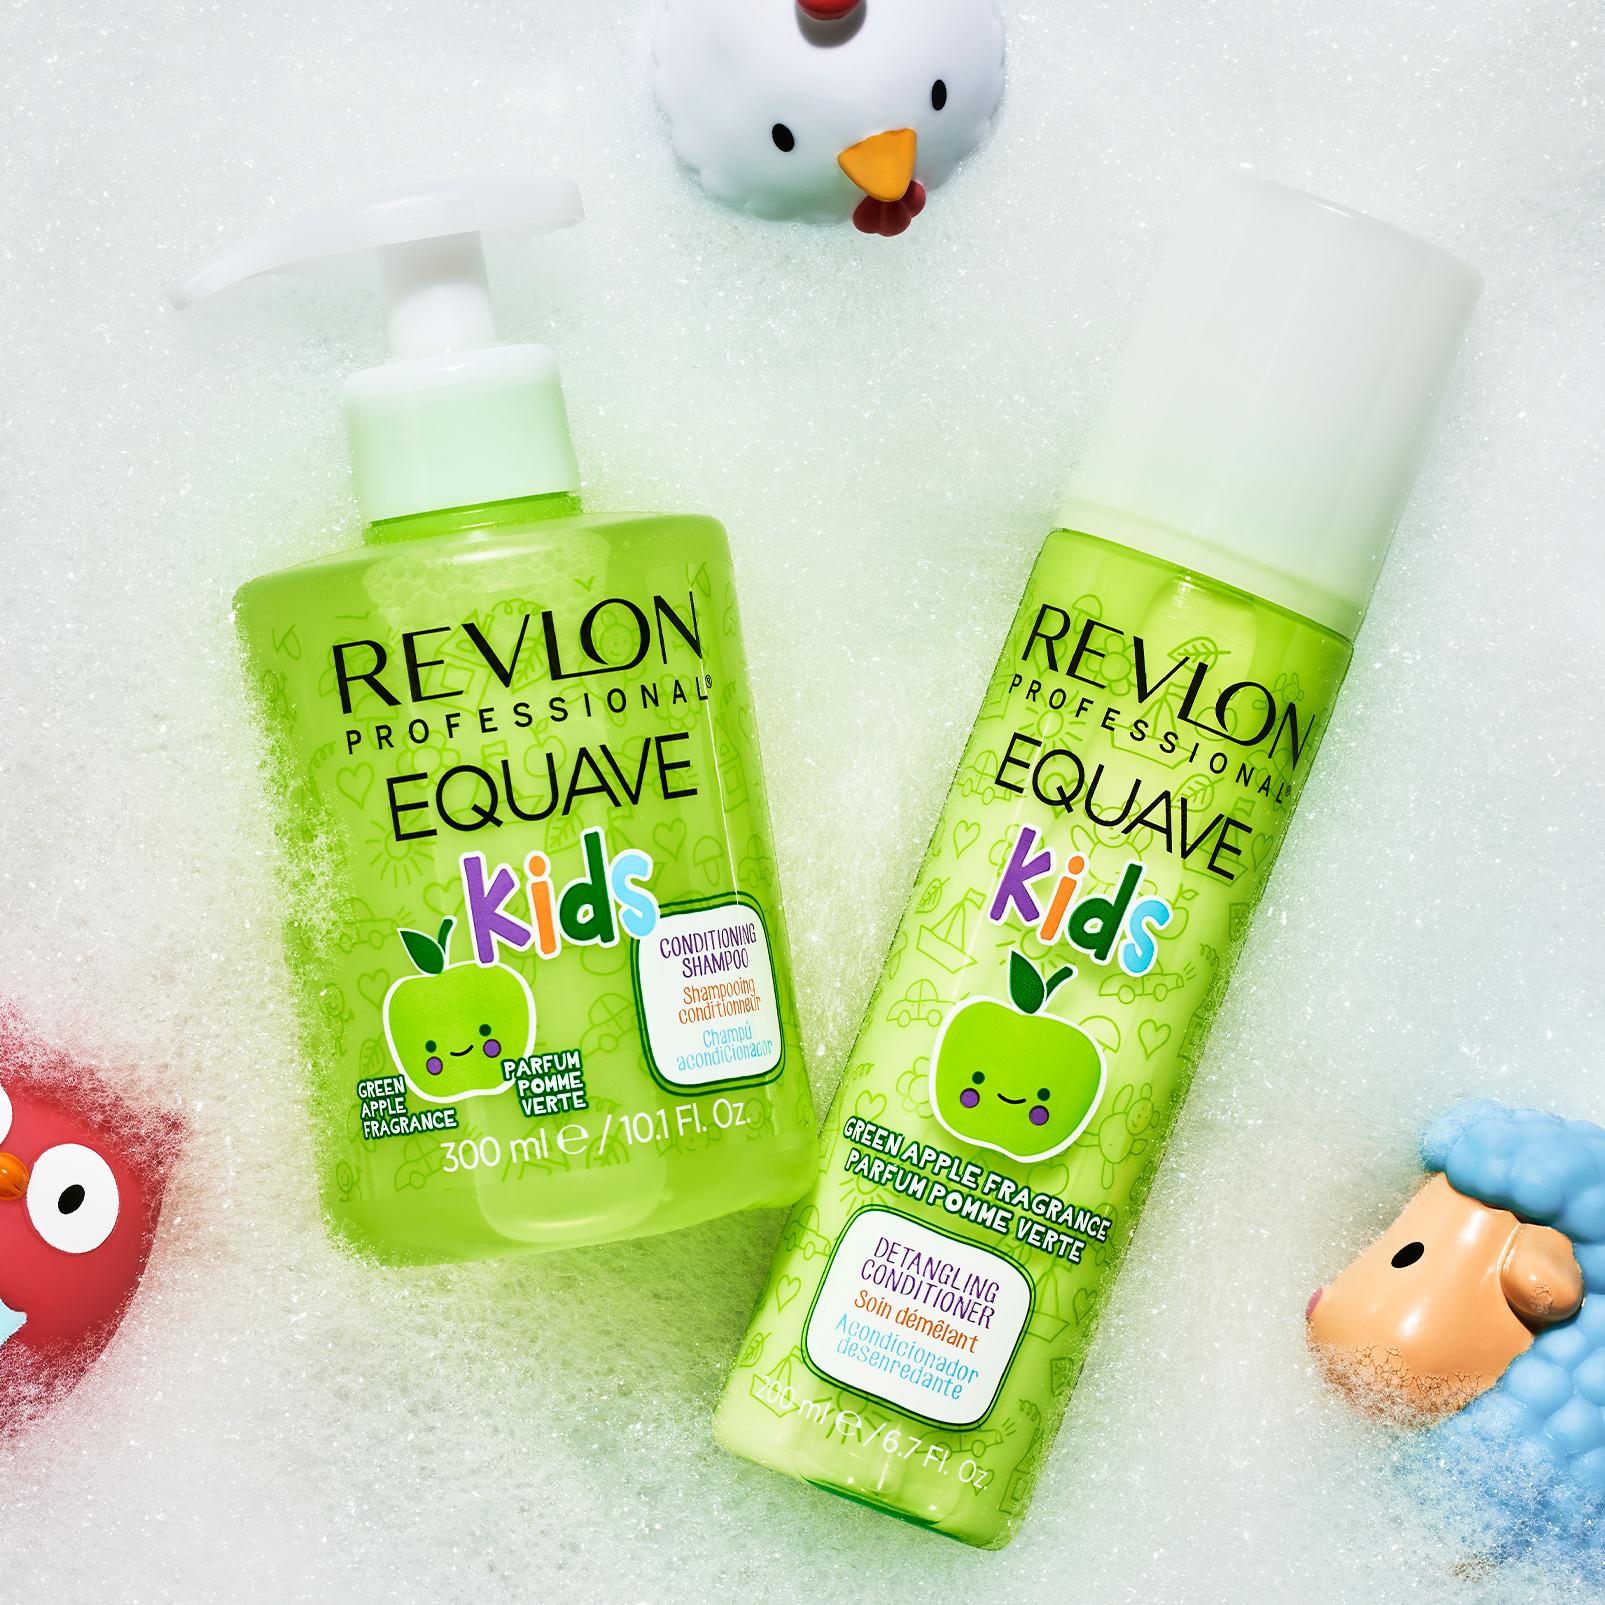 Revlon Equave Kids 2 in 1 Shampoo 300ml 